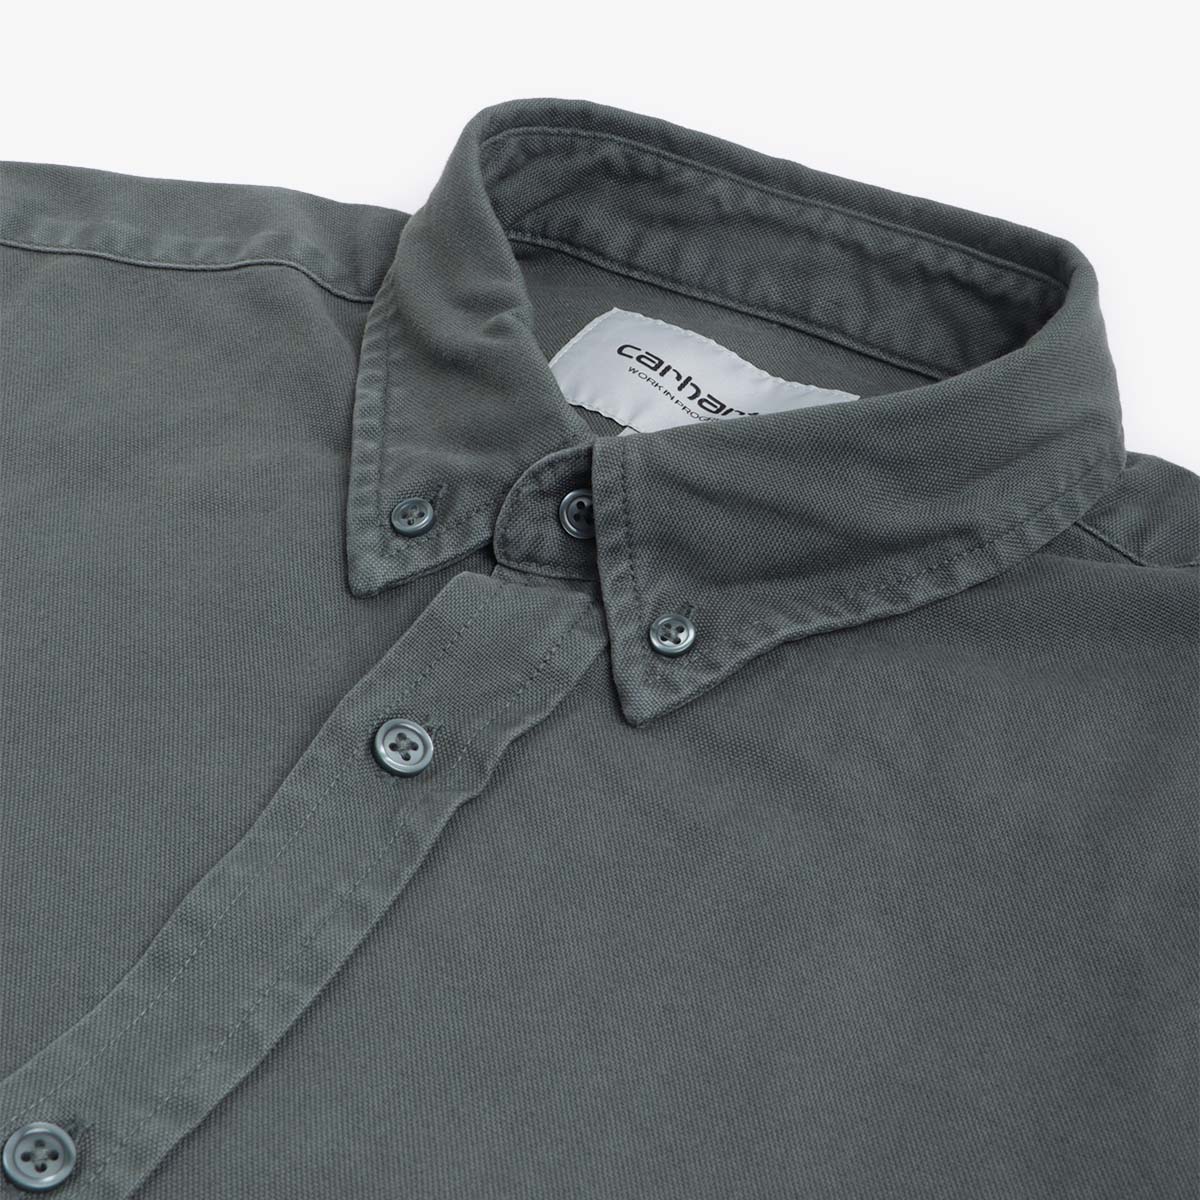 Carhartt WIP Bolton Long Sleeve Shirt, Jura (Garment Dyed), Detail Shot 2